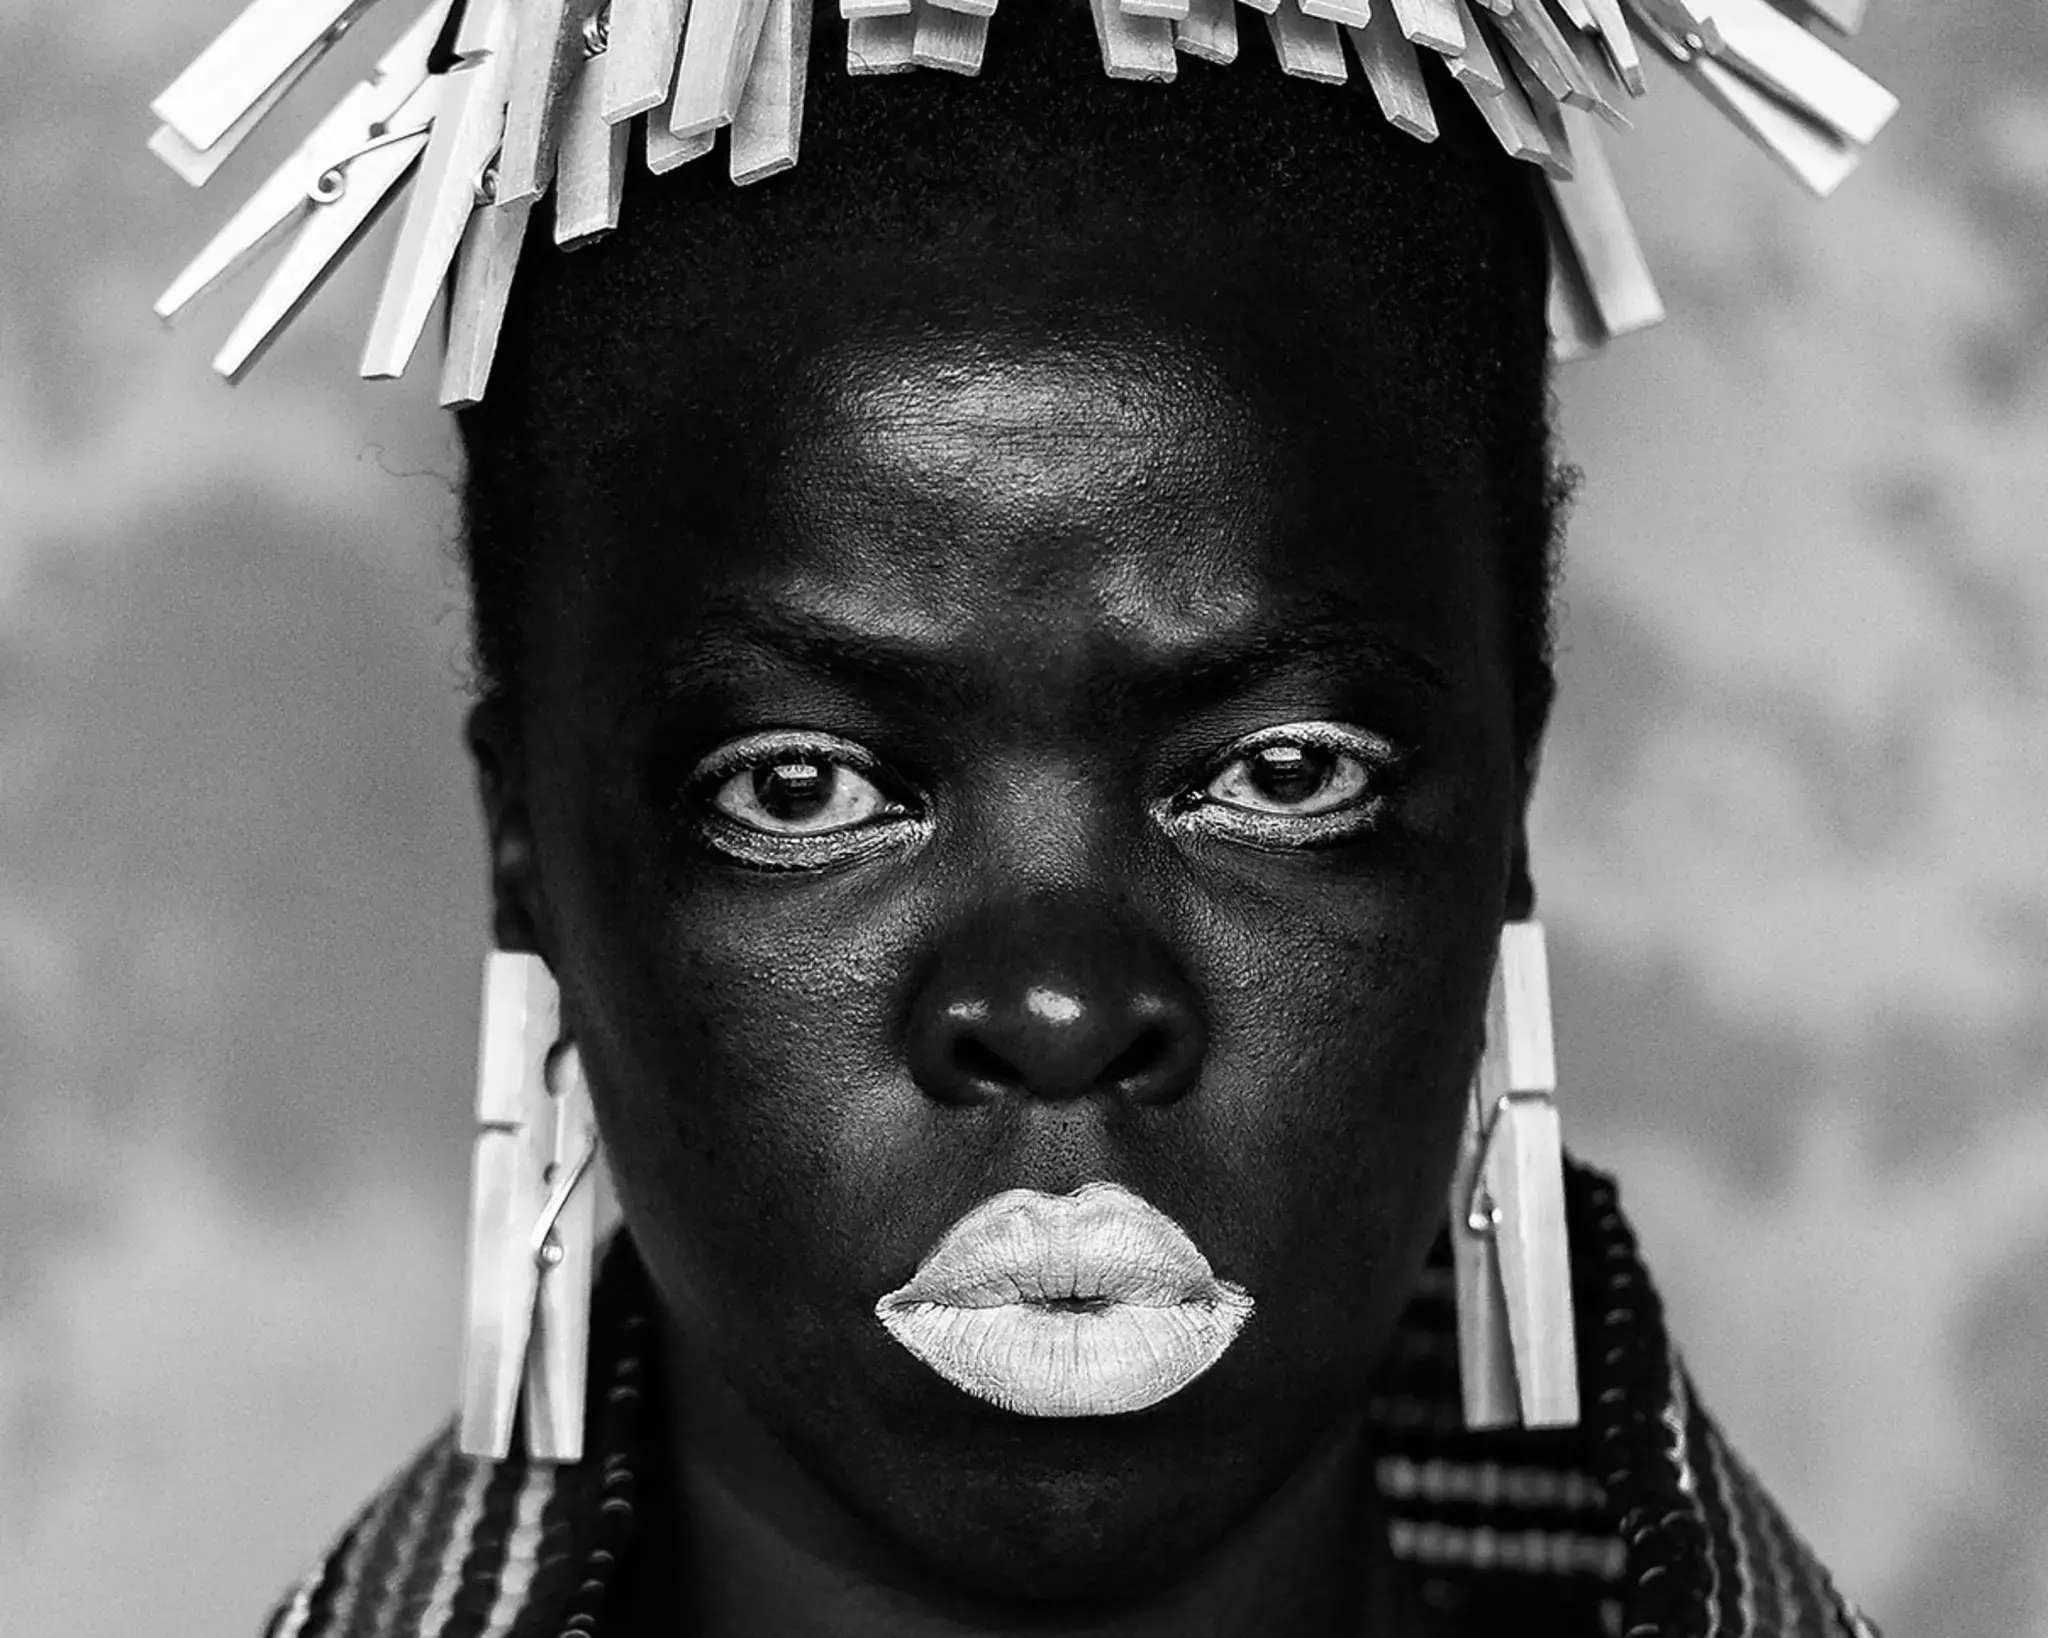 Zanele Muholi, Bester I, 2015, self portrait, Mayotte. Photo courtesy of the artist.